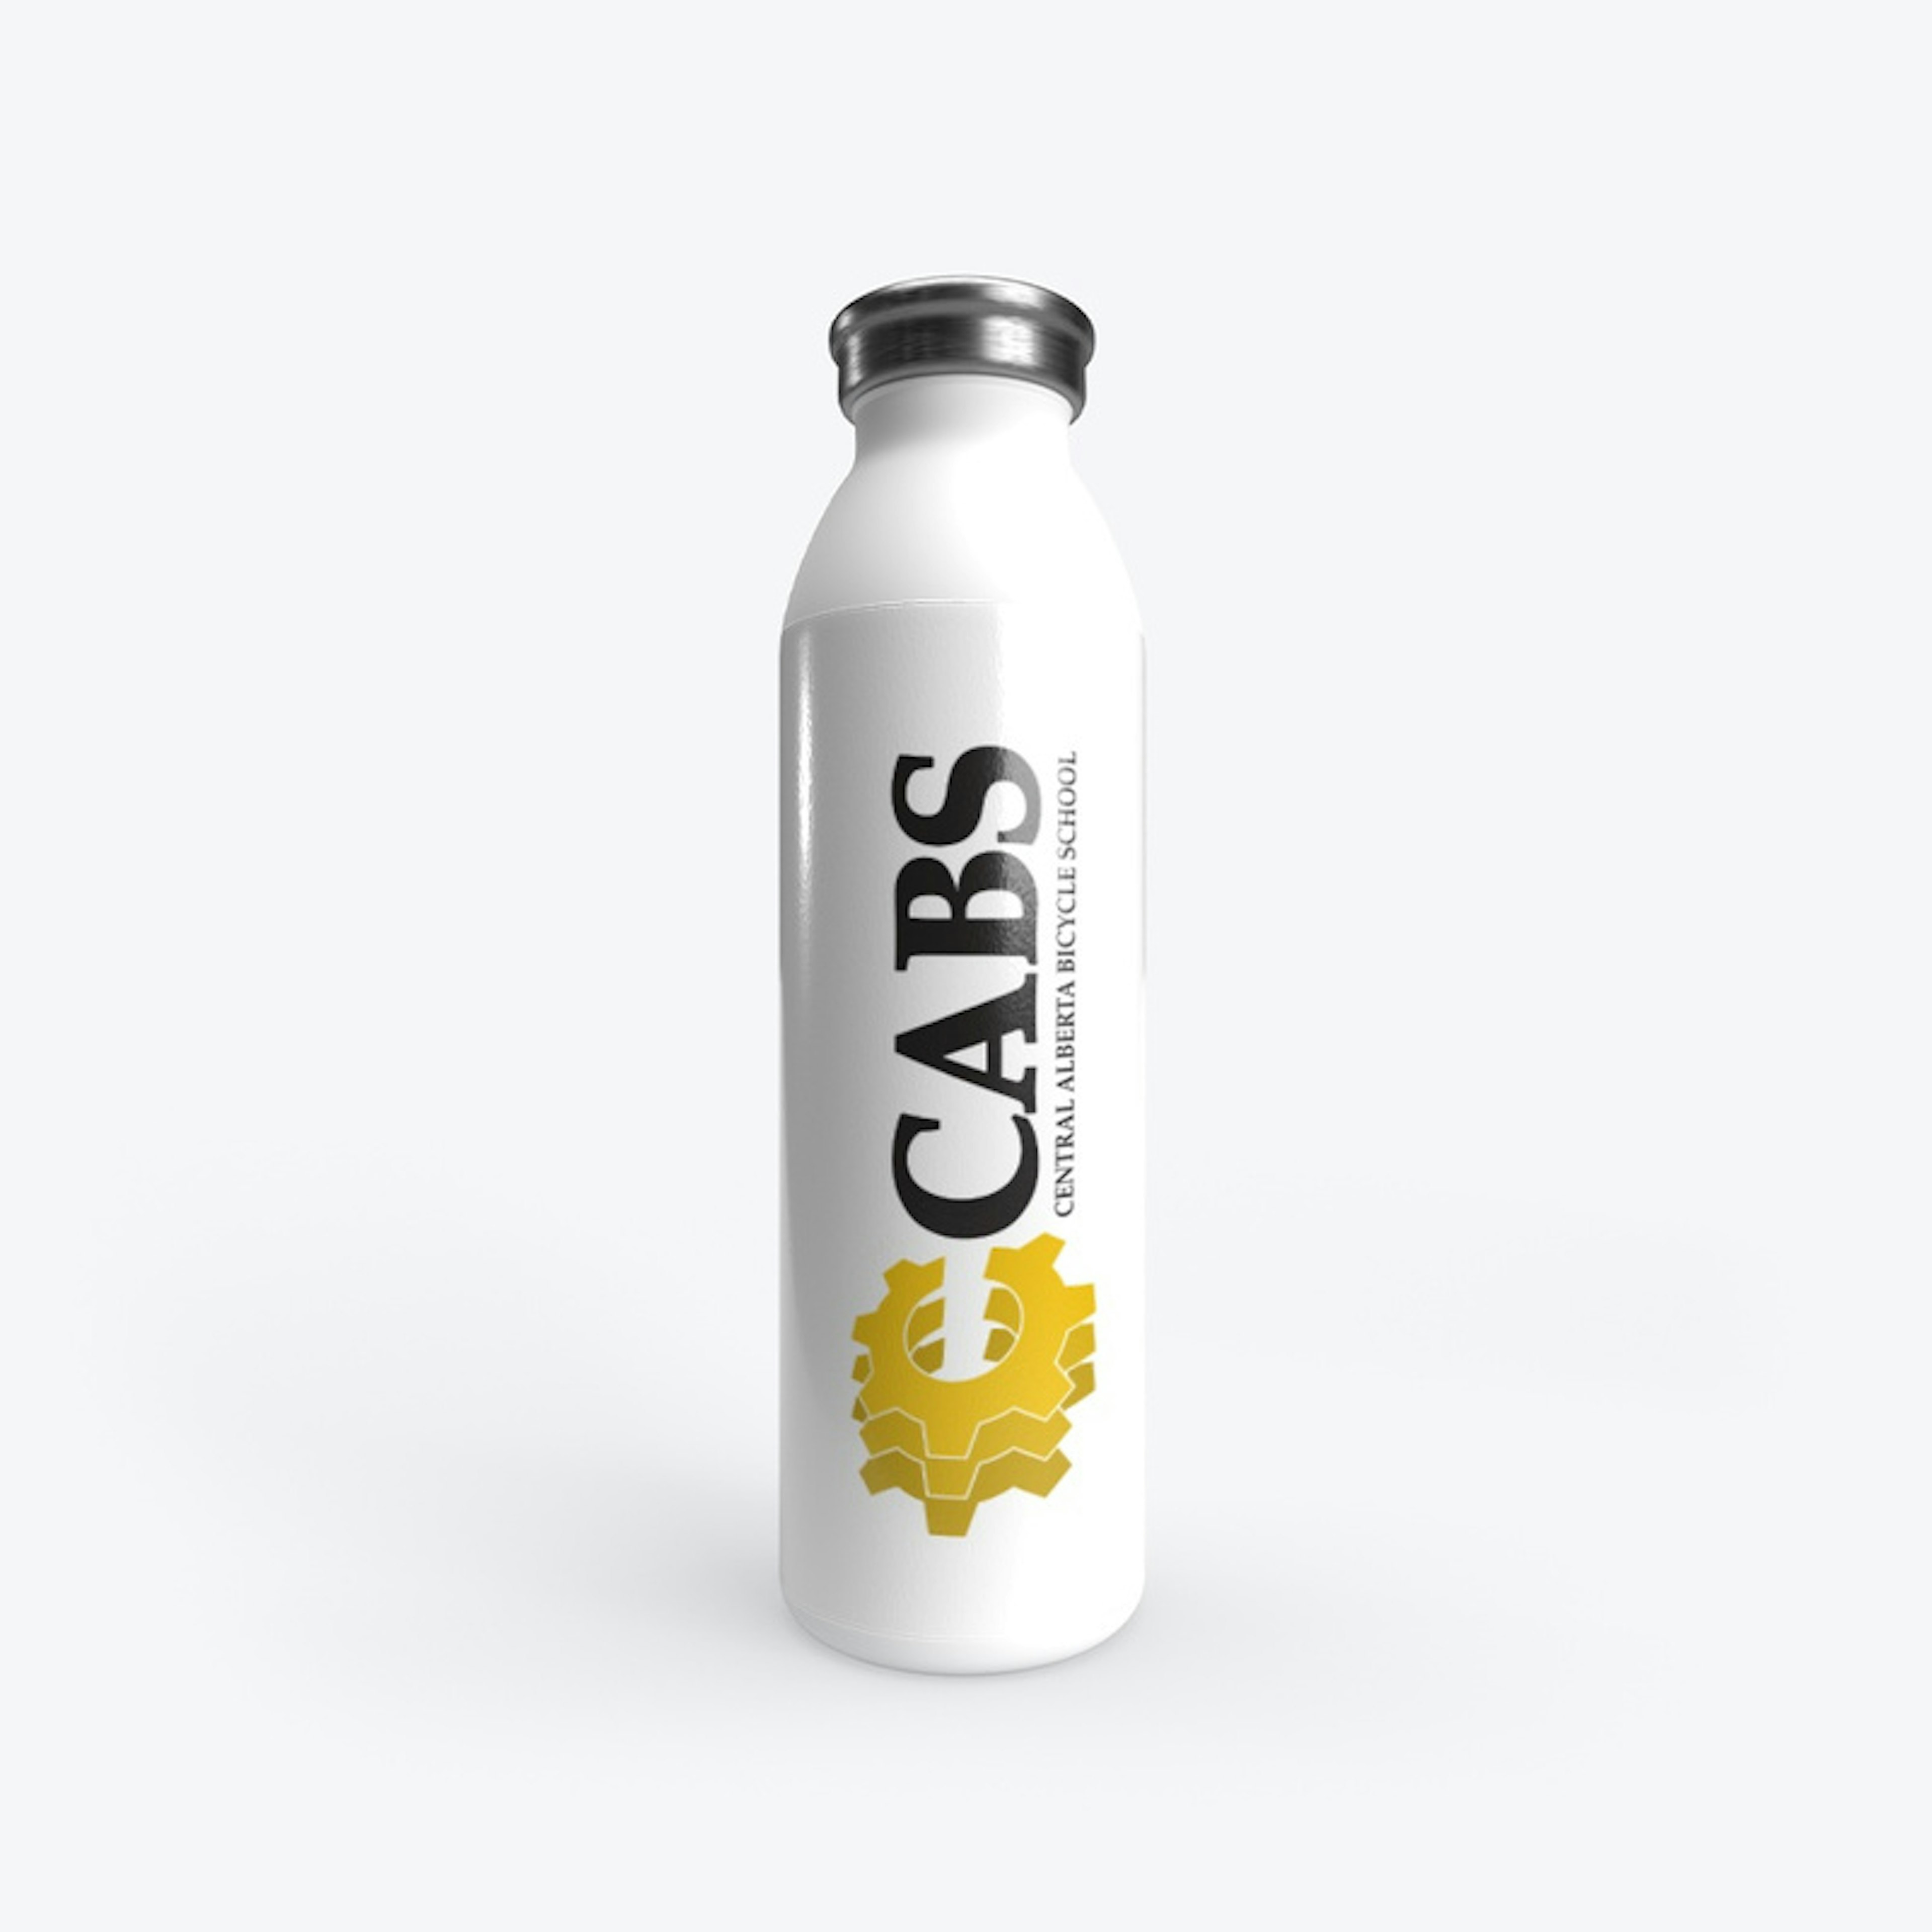 CABS Certified Water Bottle